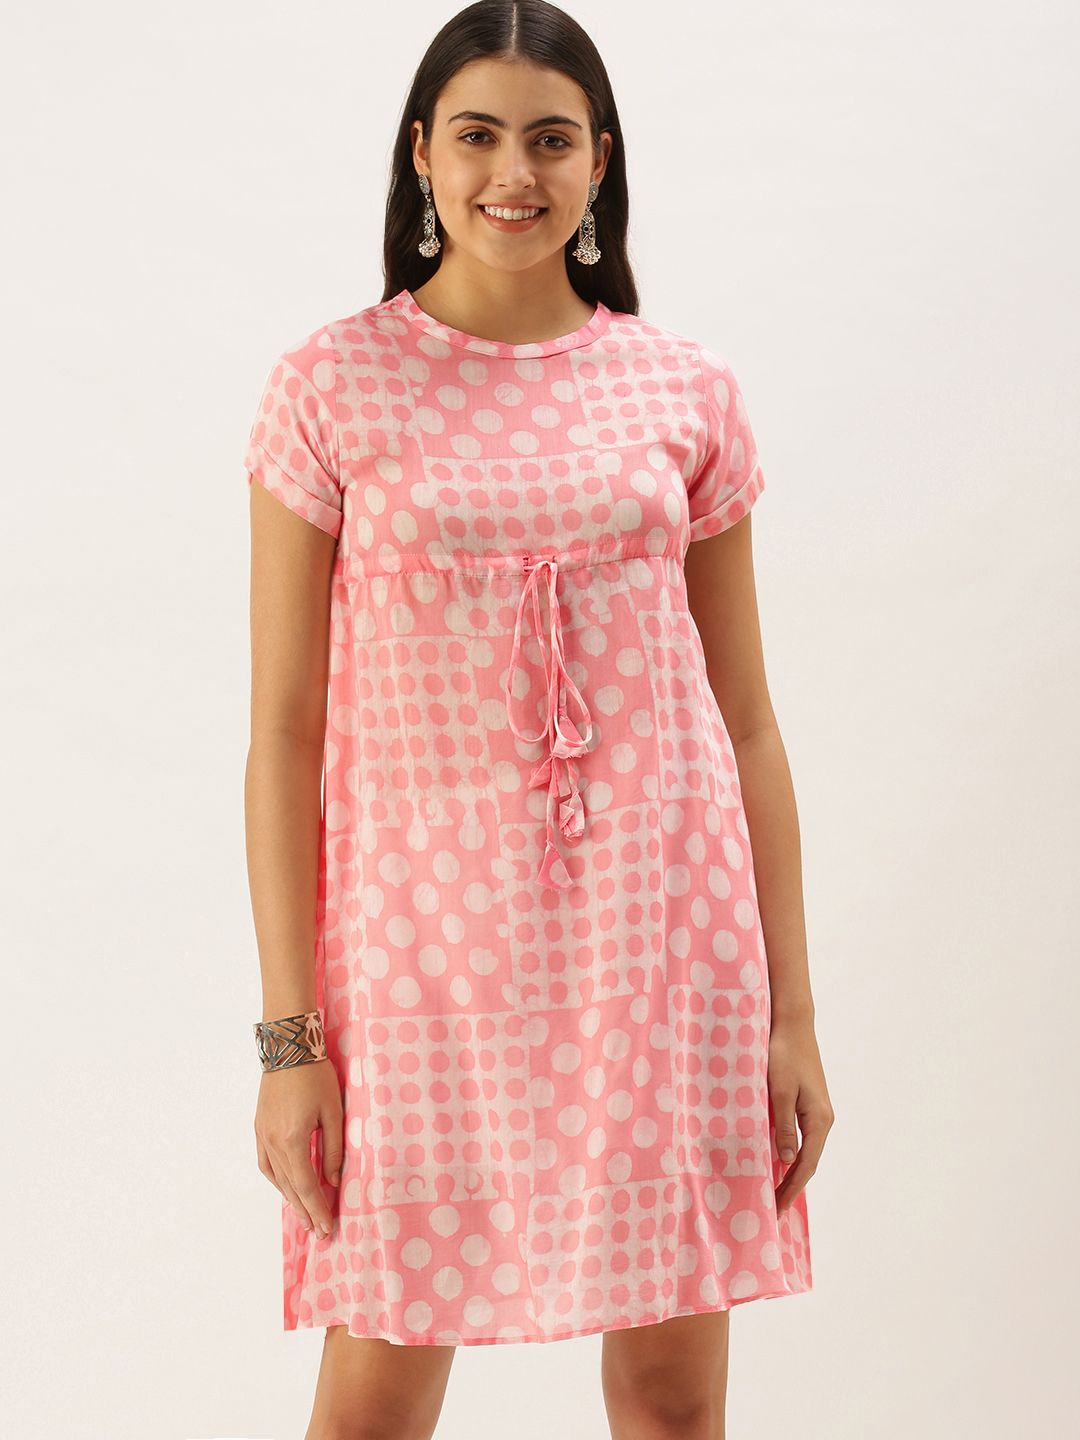 Saanjh Women Peach-Coloured & White Polka-Dot Empire Dress Price in India